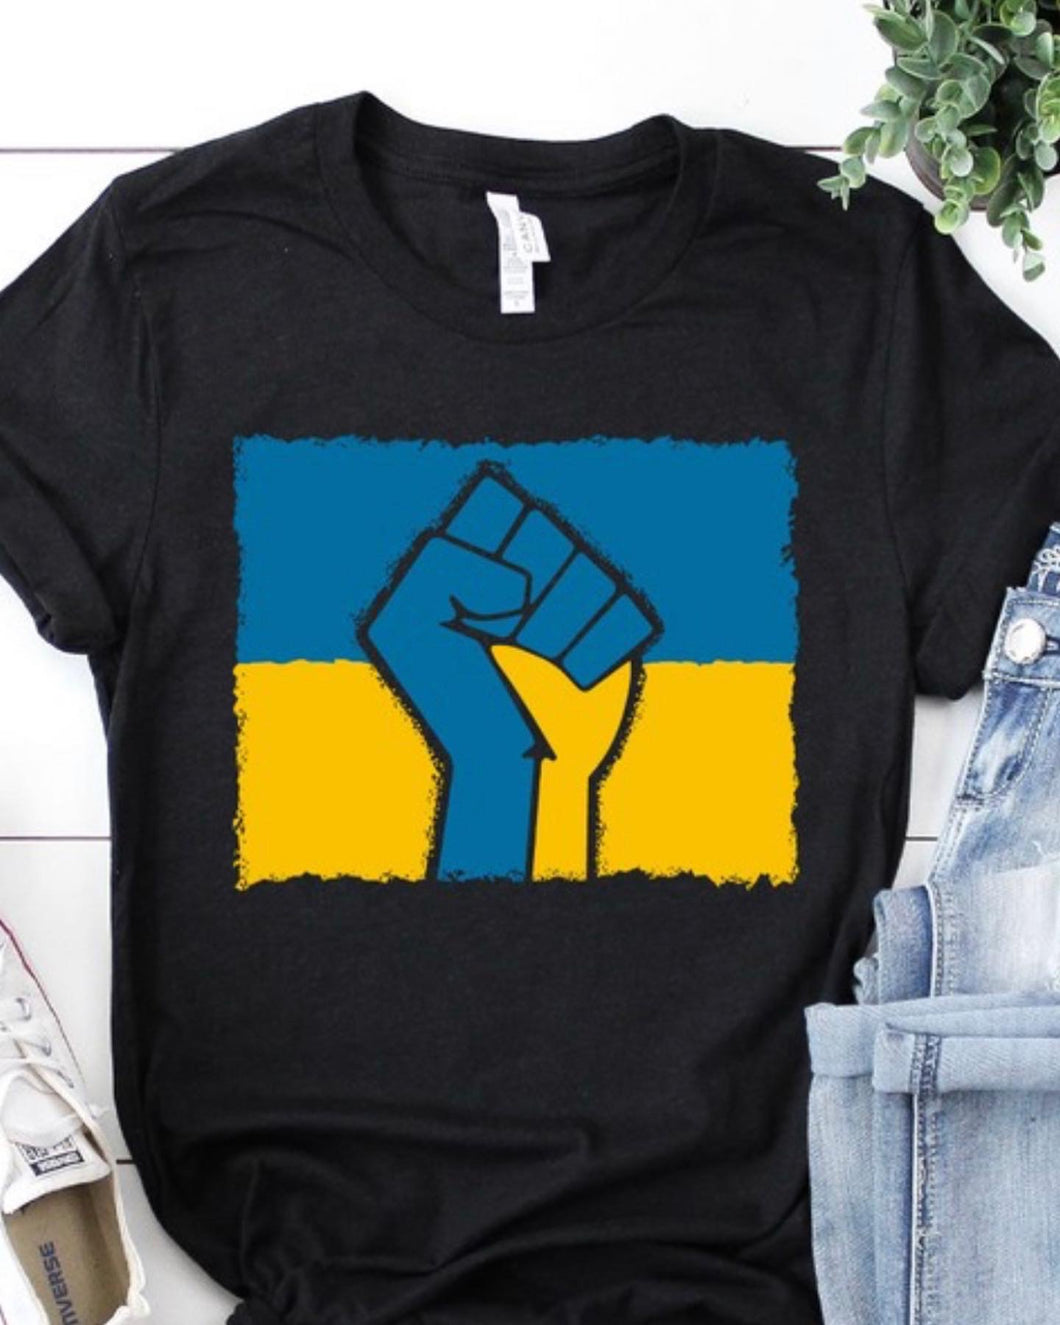 Stand With Ukraine - Black Tee